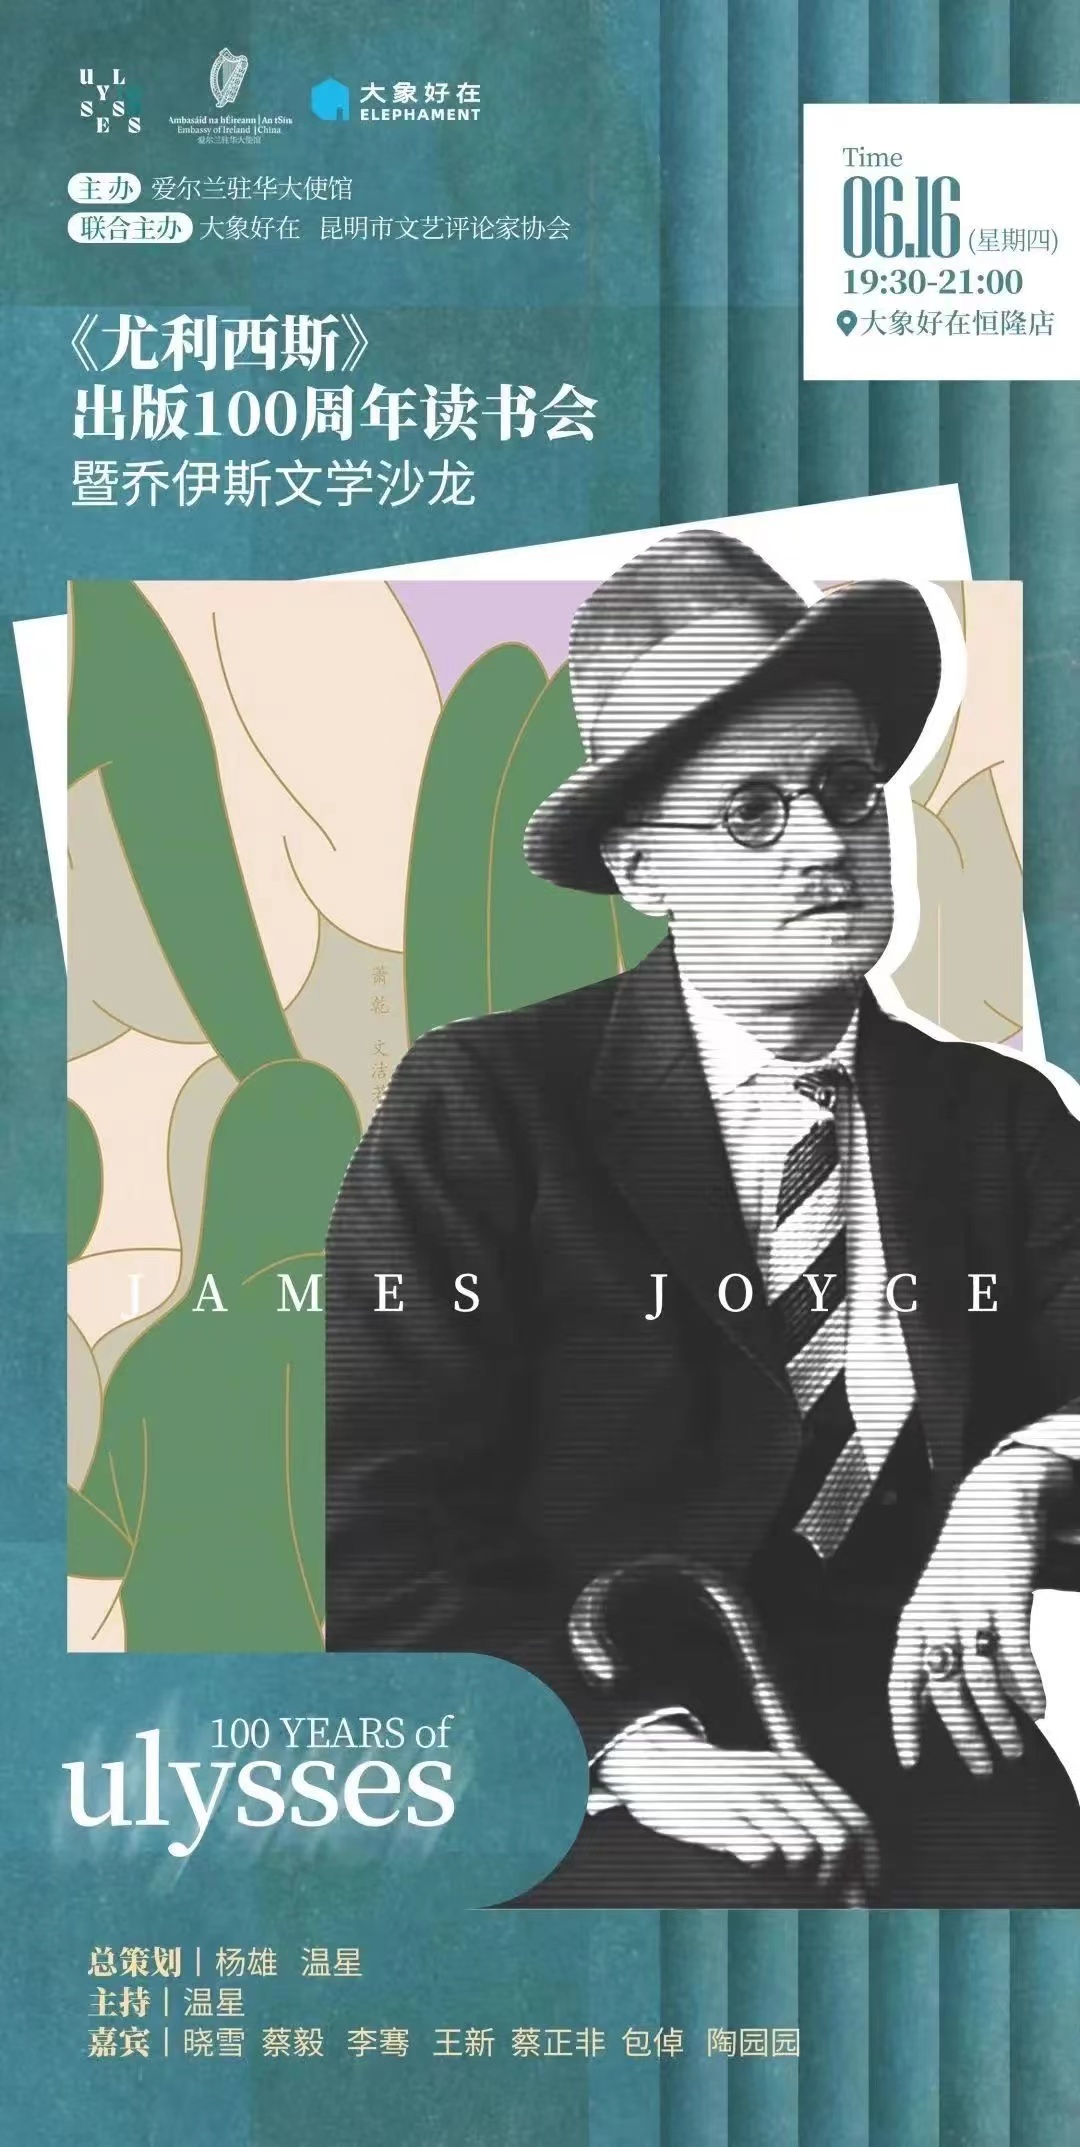 Bloomsday---James-Joyce-literature--event.jpg